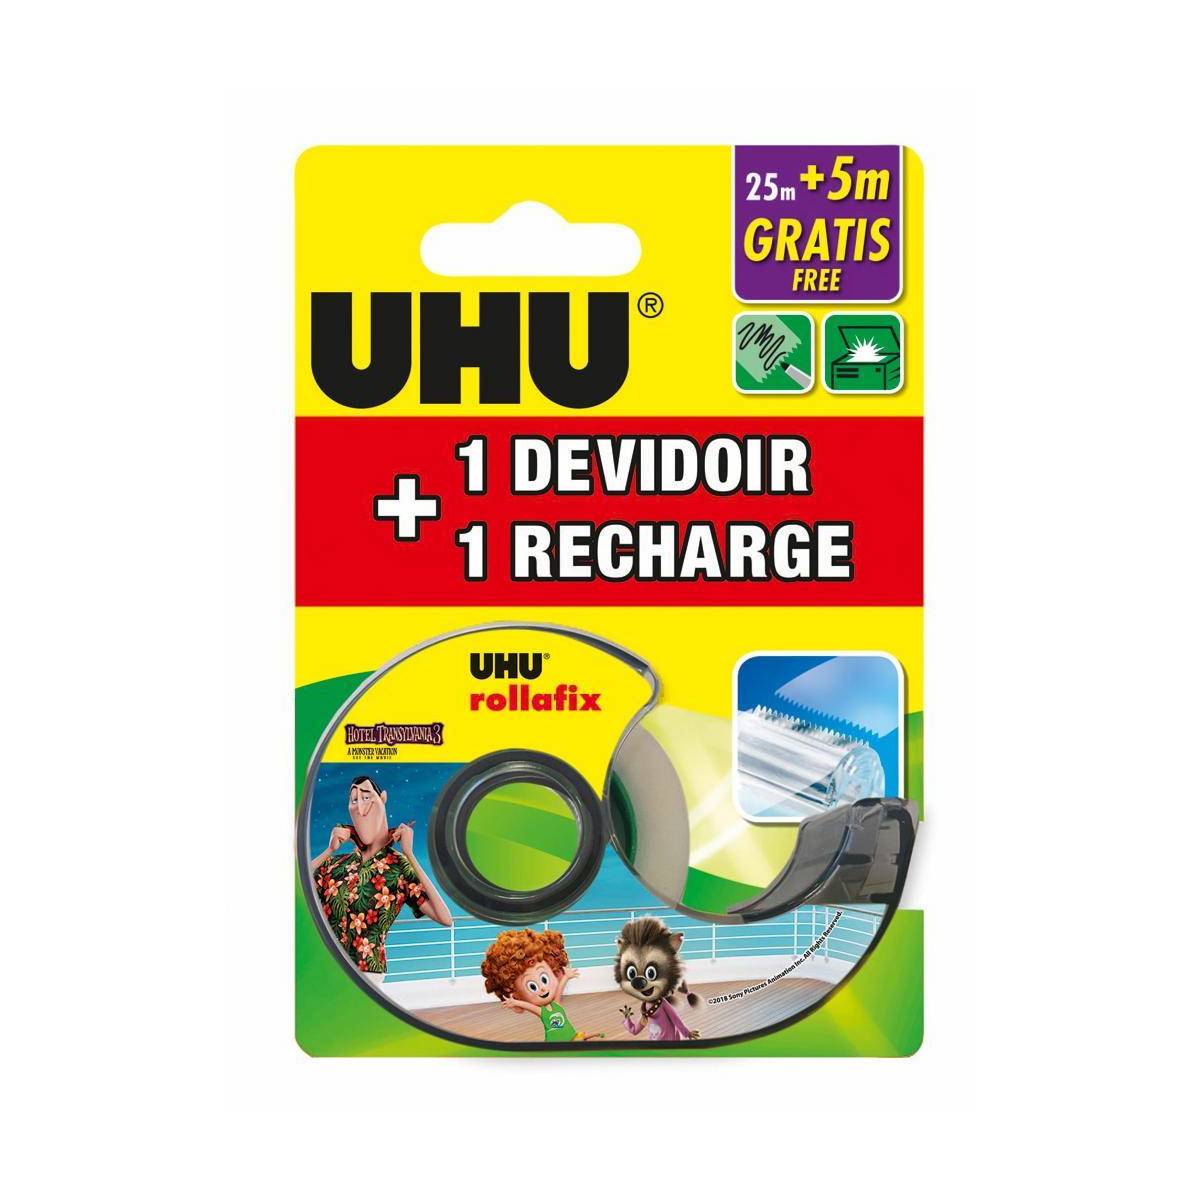 UHU Rollafix Ruban adhesif Invisible 25 m + 5m Gratis